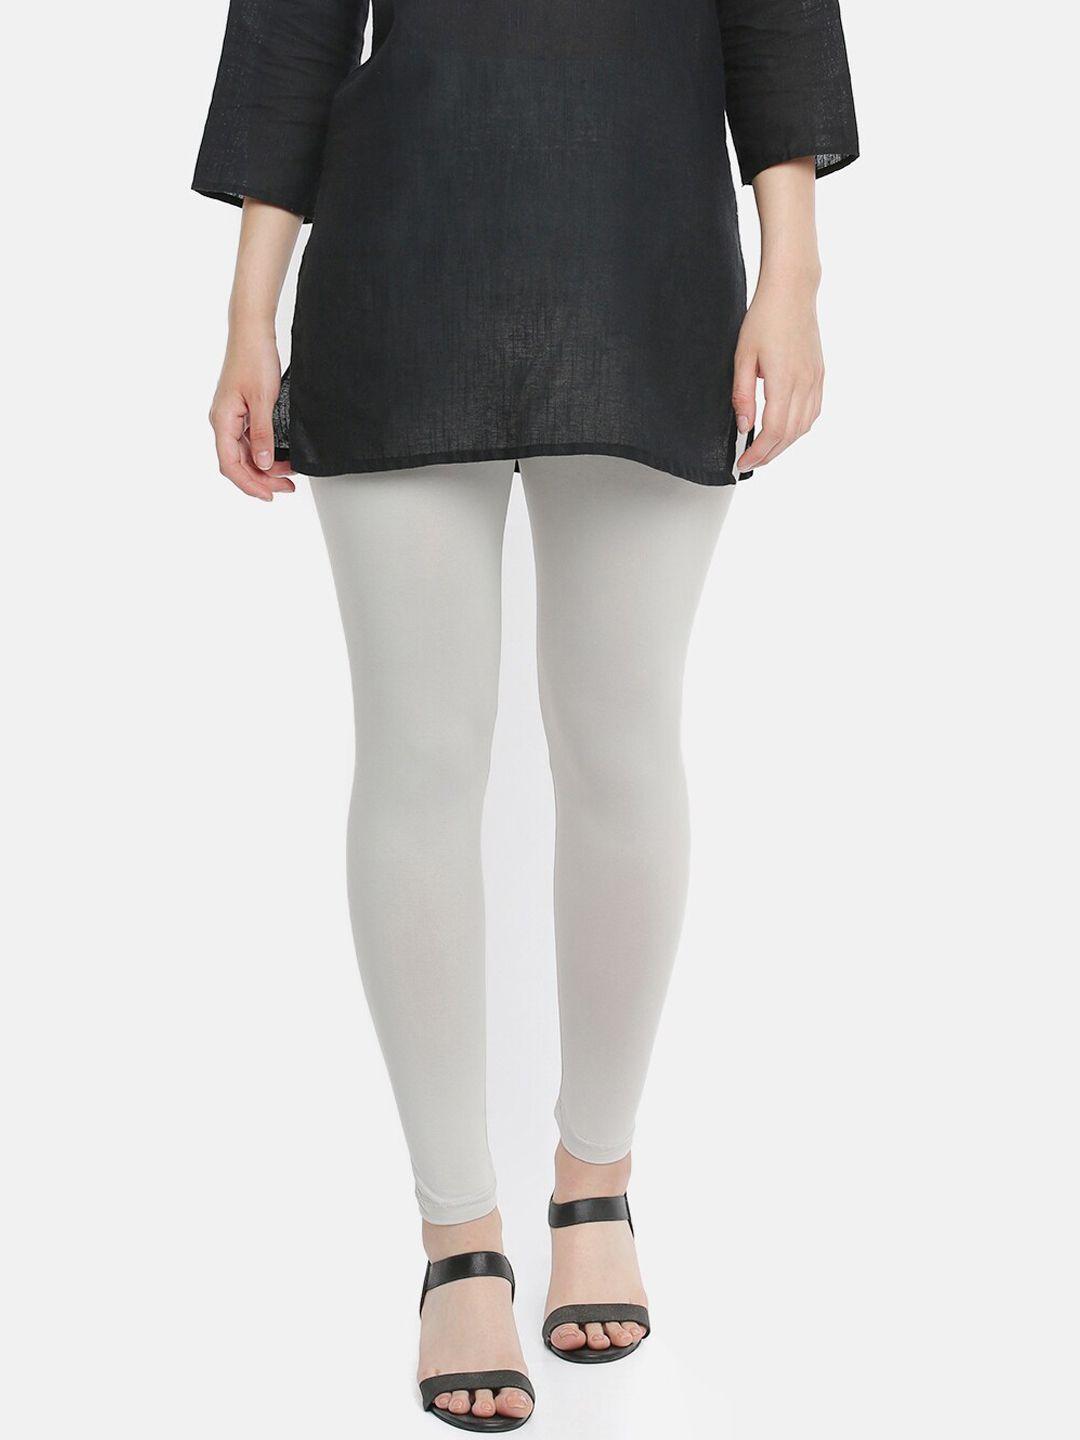 dollar missy women grey solid ankle-length leggings